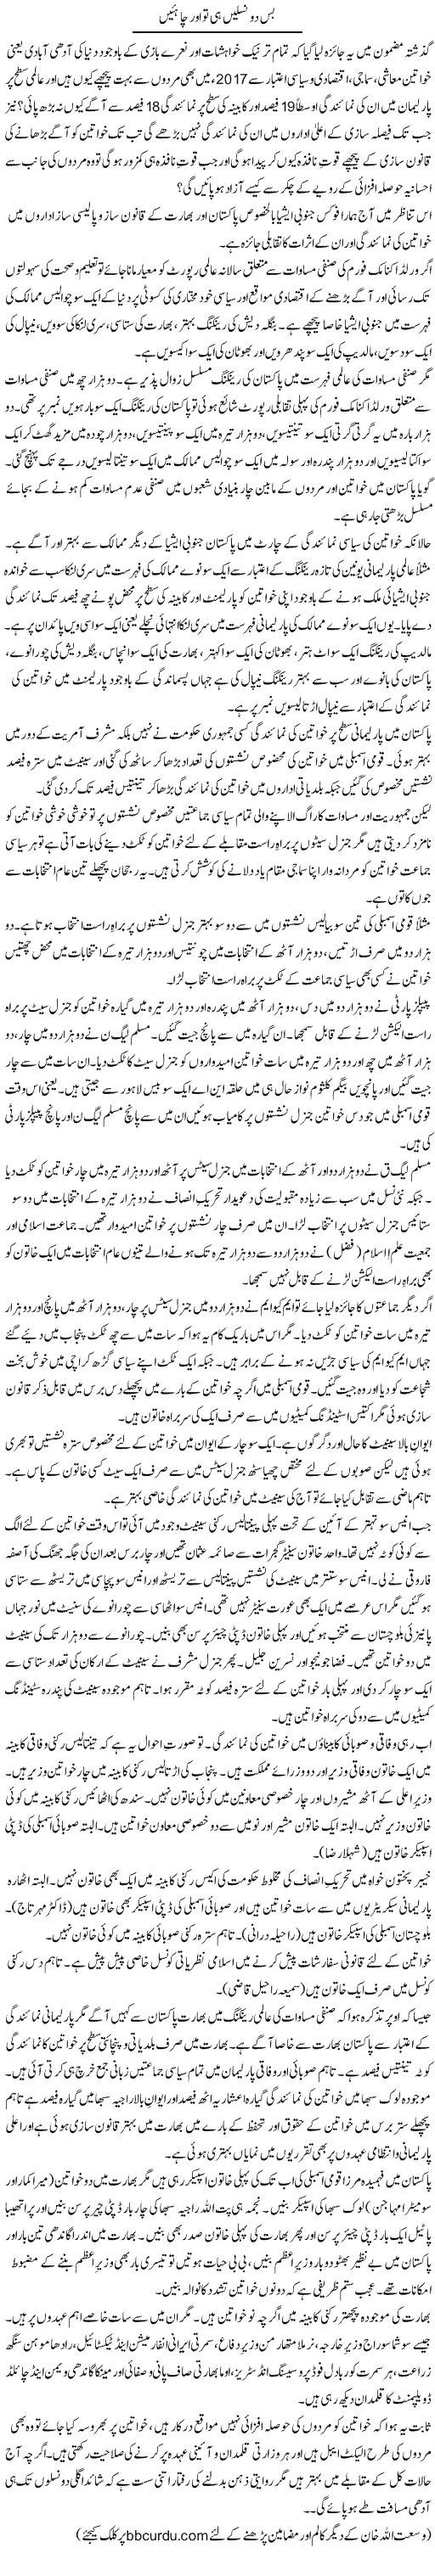 Bas Do Naslein Hi To Aur Chahiye | Wusat Ullah Khan | Daily Urdu Columns